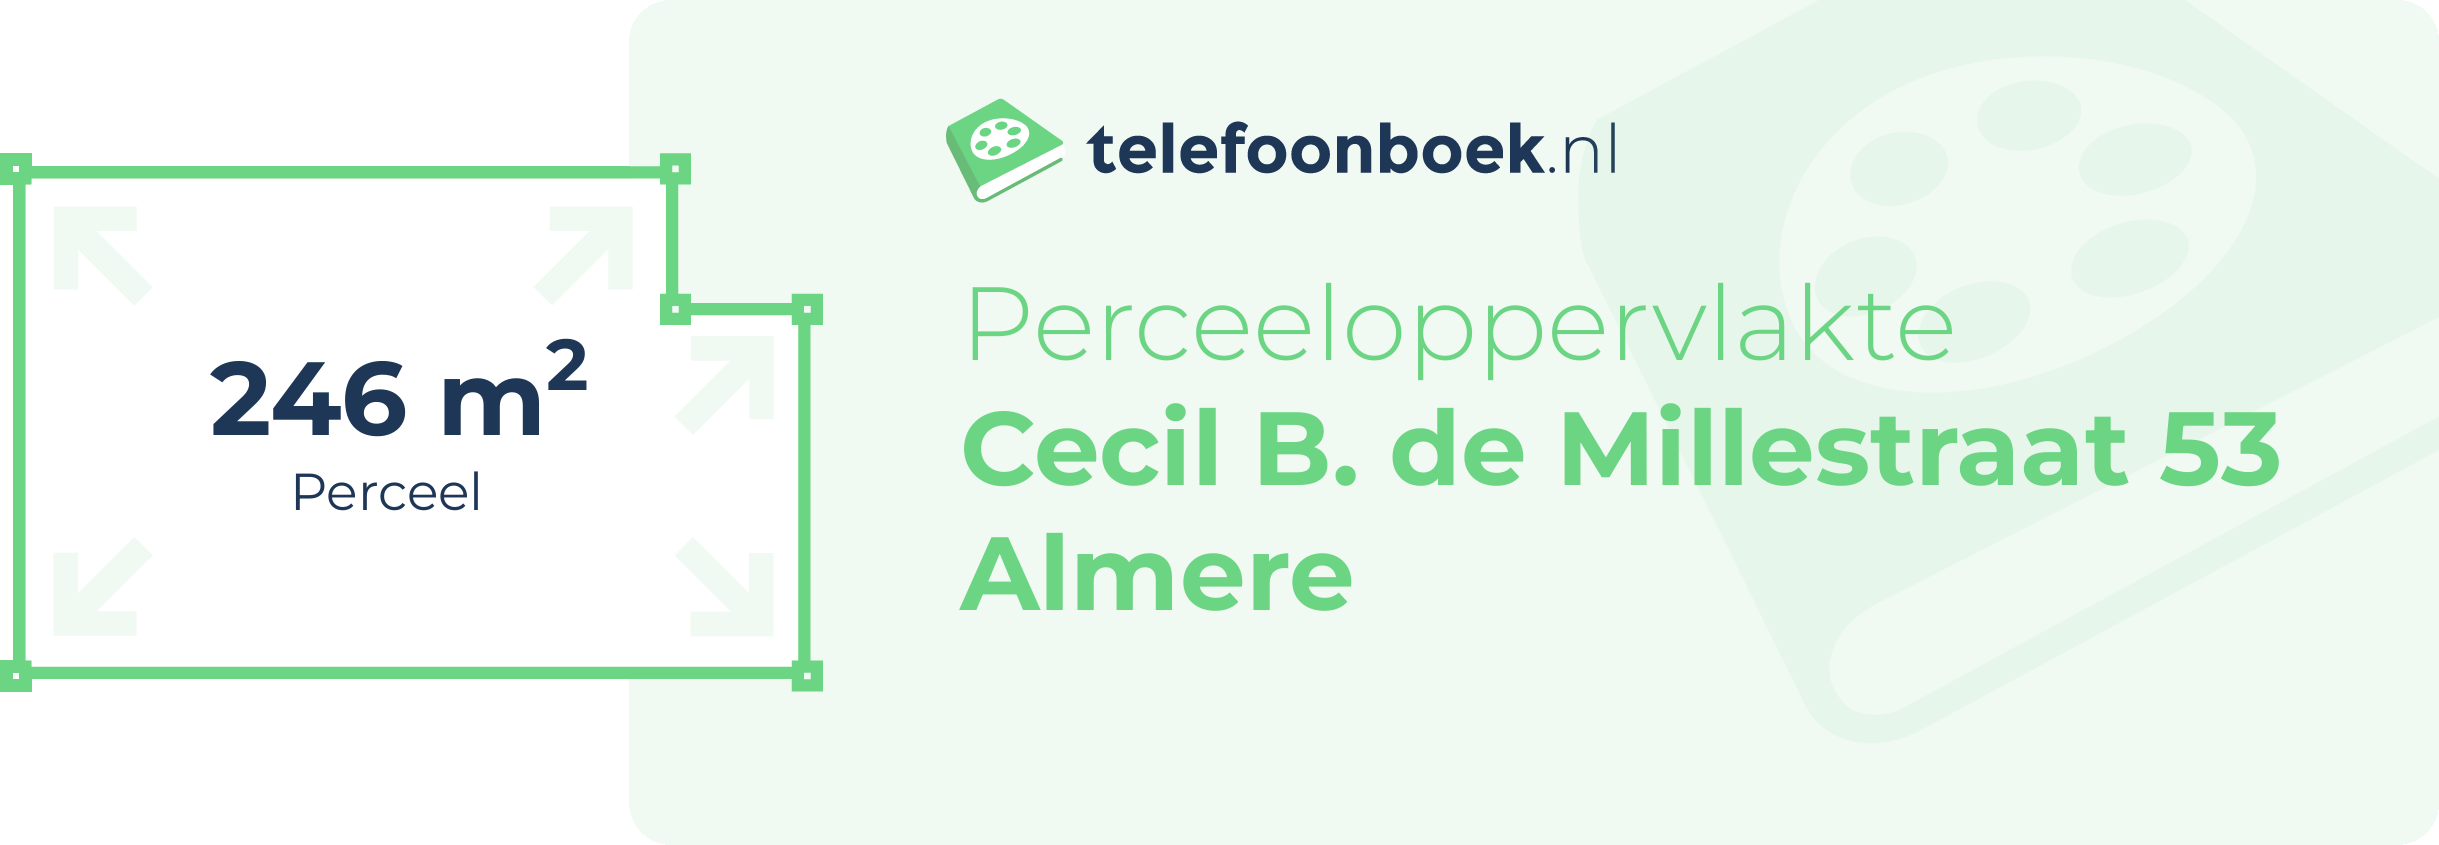 Perceeloppervlakte Cecil B. De Millestraat 53 Almere